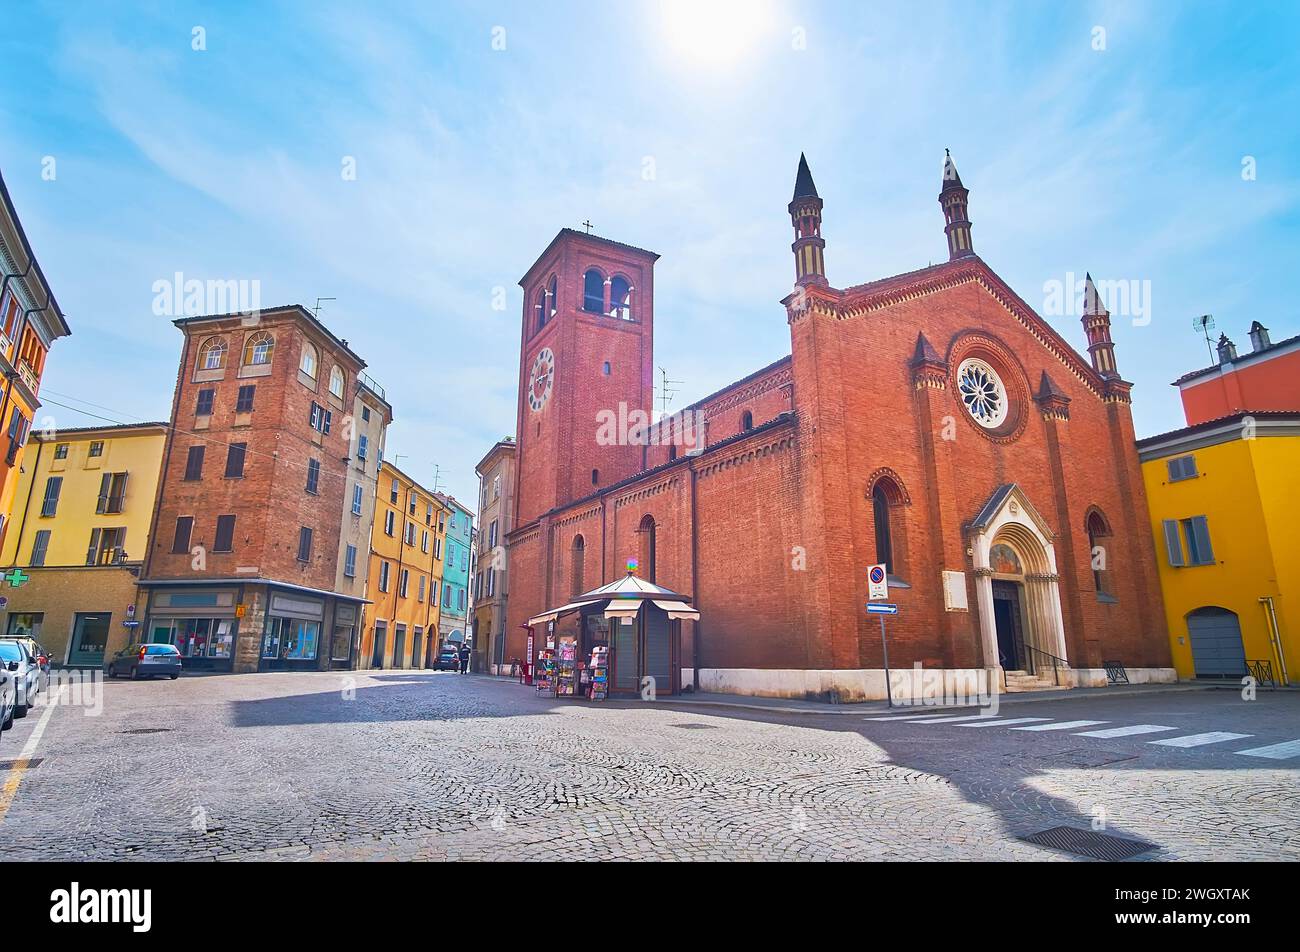 The medieval Piazza del Borgo with Santa Brigida d'Irlanda Church and colored townhouses, Piacenza, Italy Stock Photo